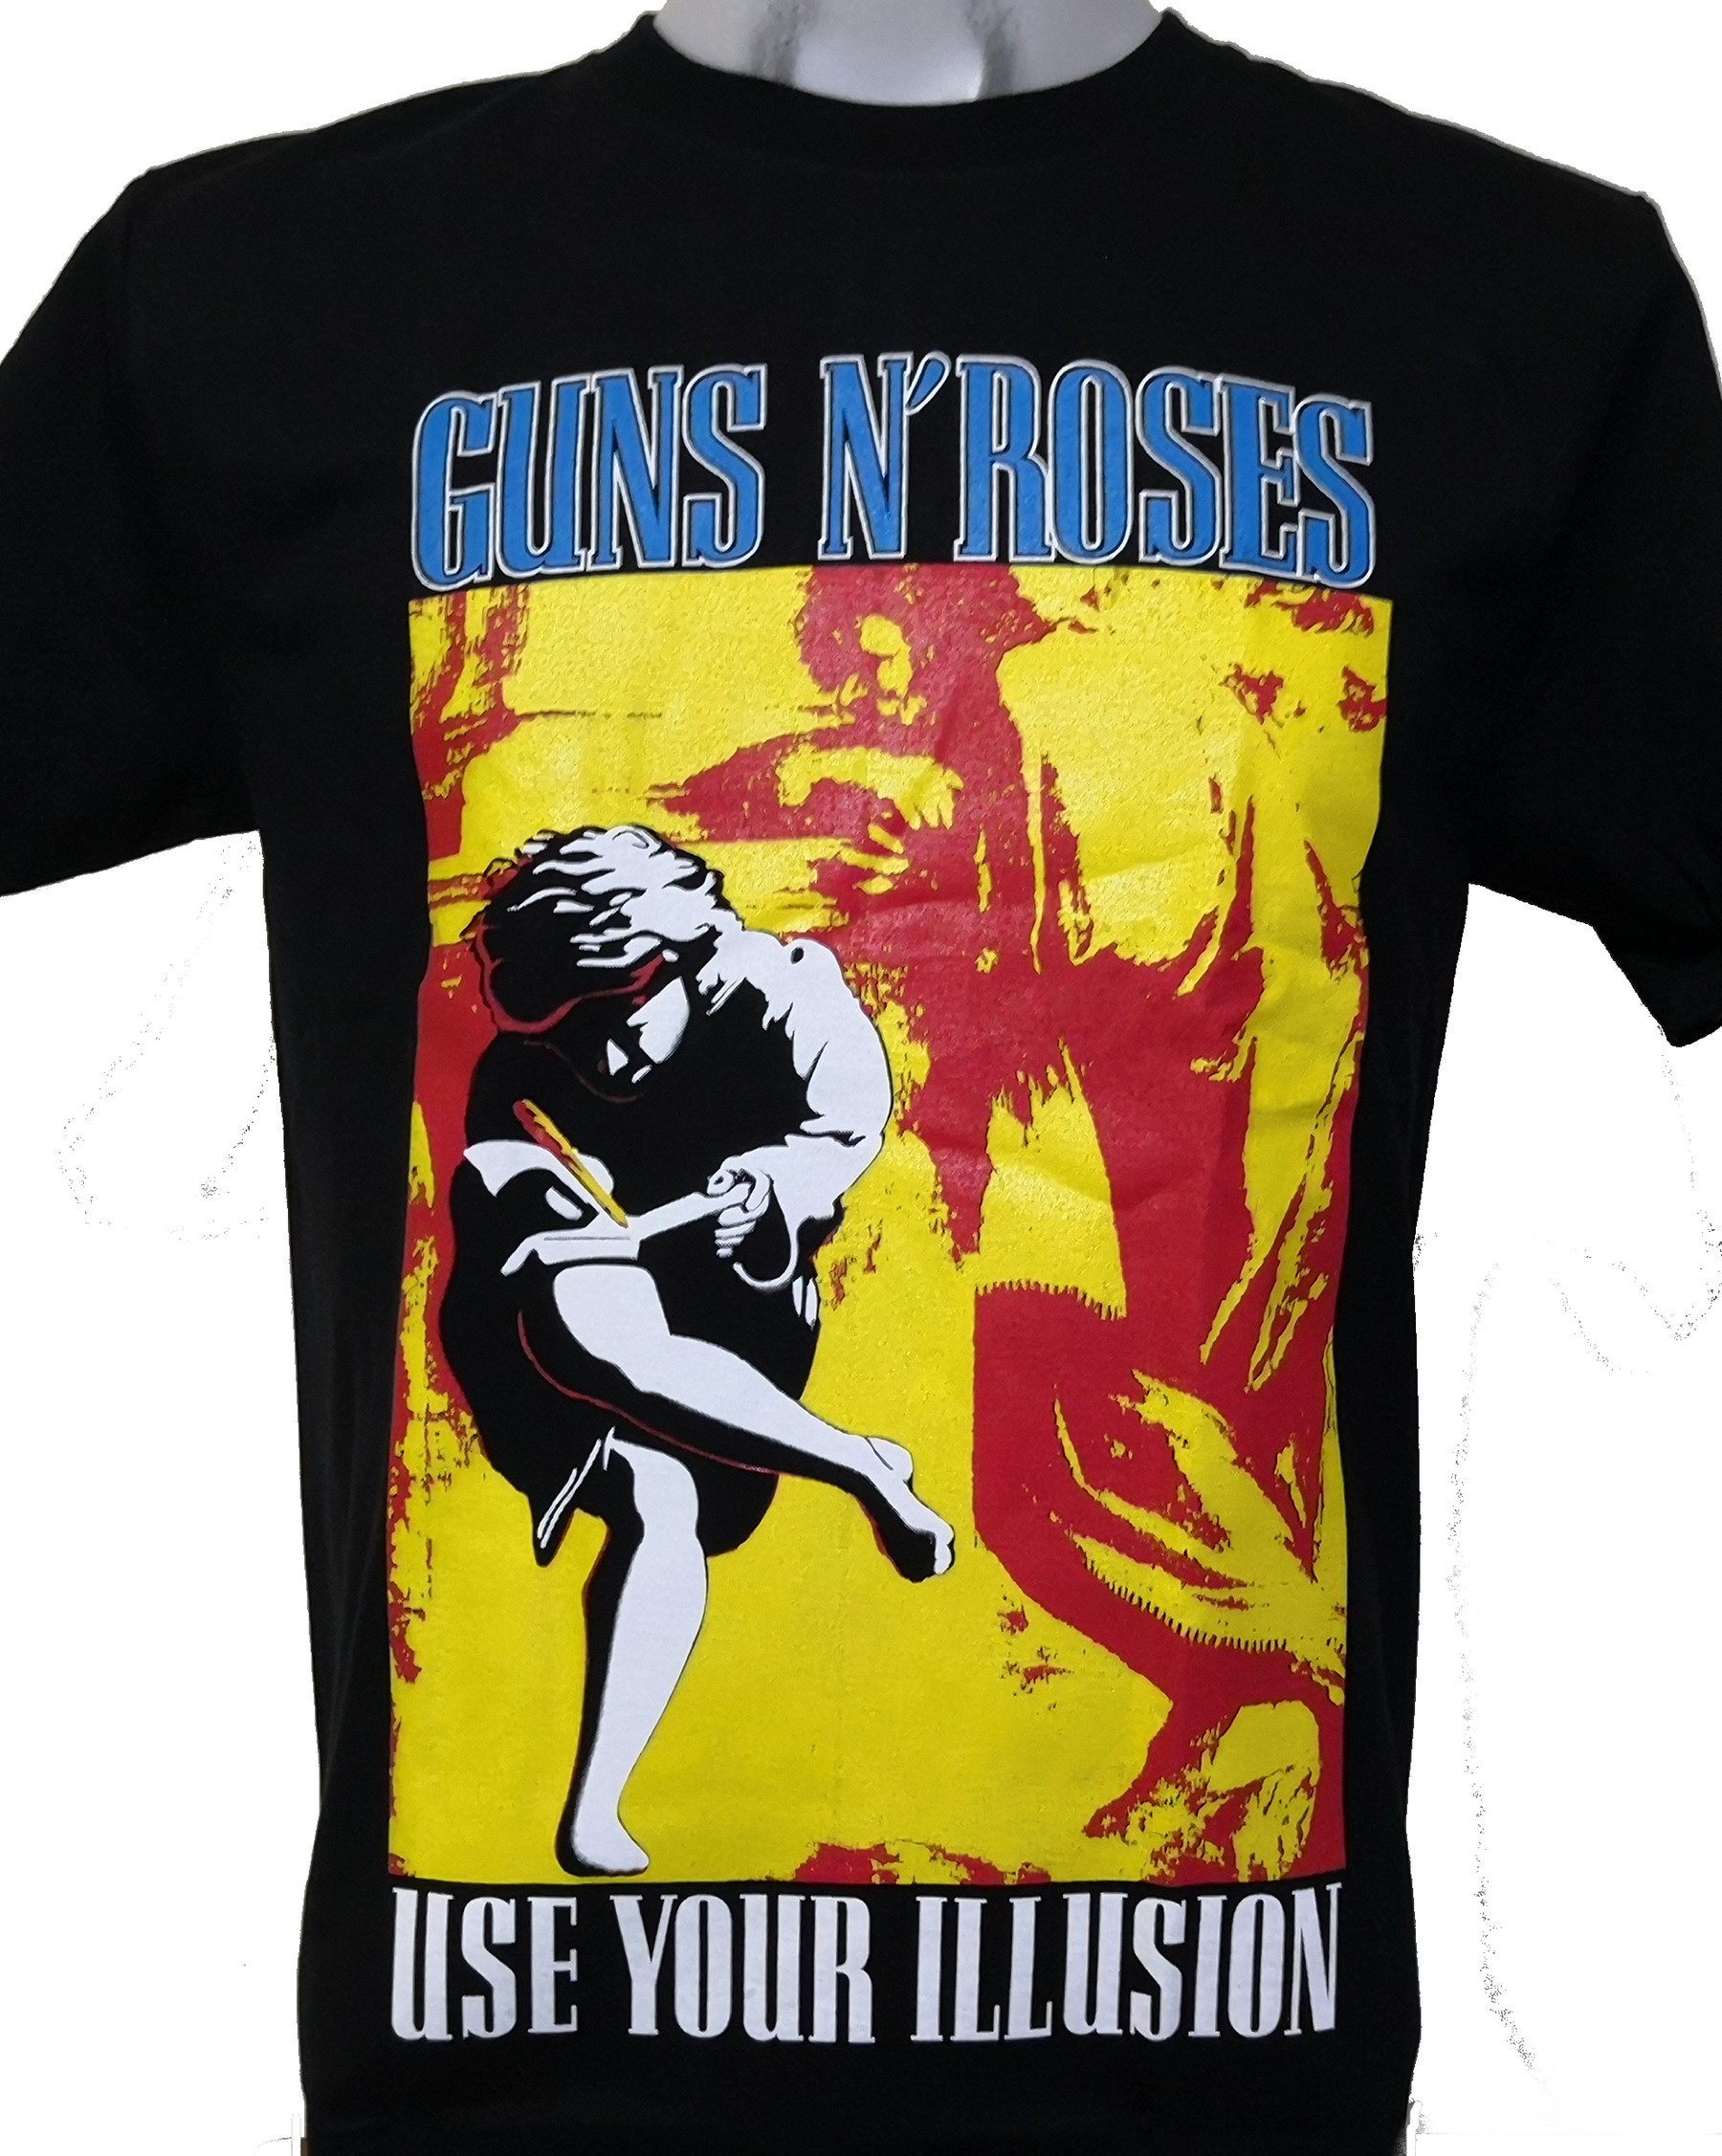 GUNS N' ROSES *Use Your Illusion Rock Band Legend Men's Black T-Shirt Size S-3XL